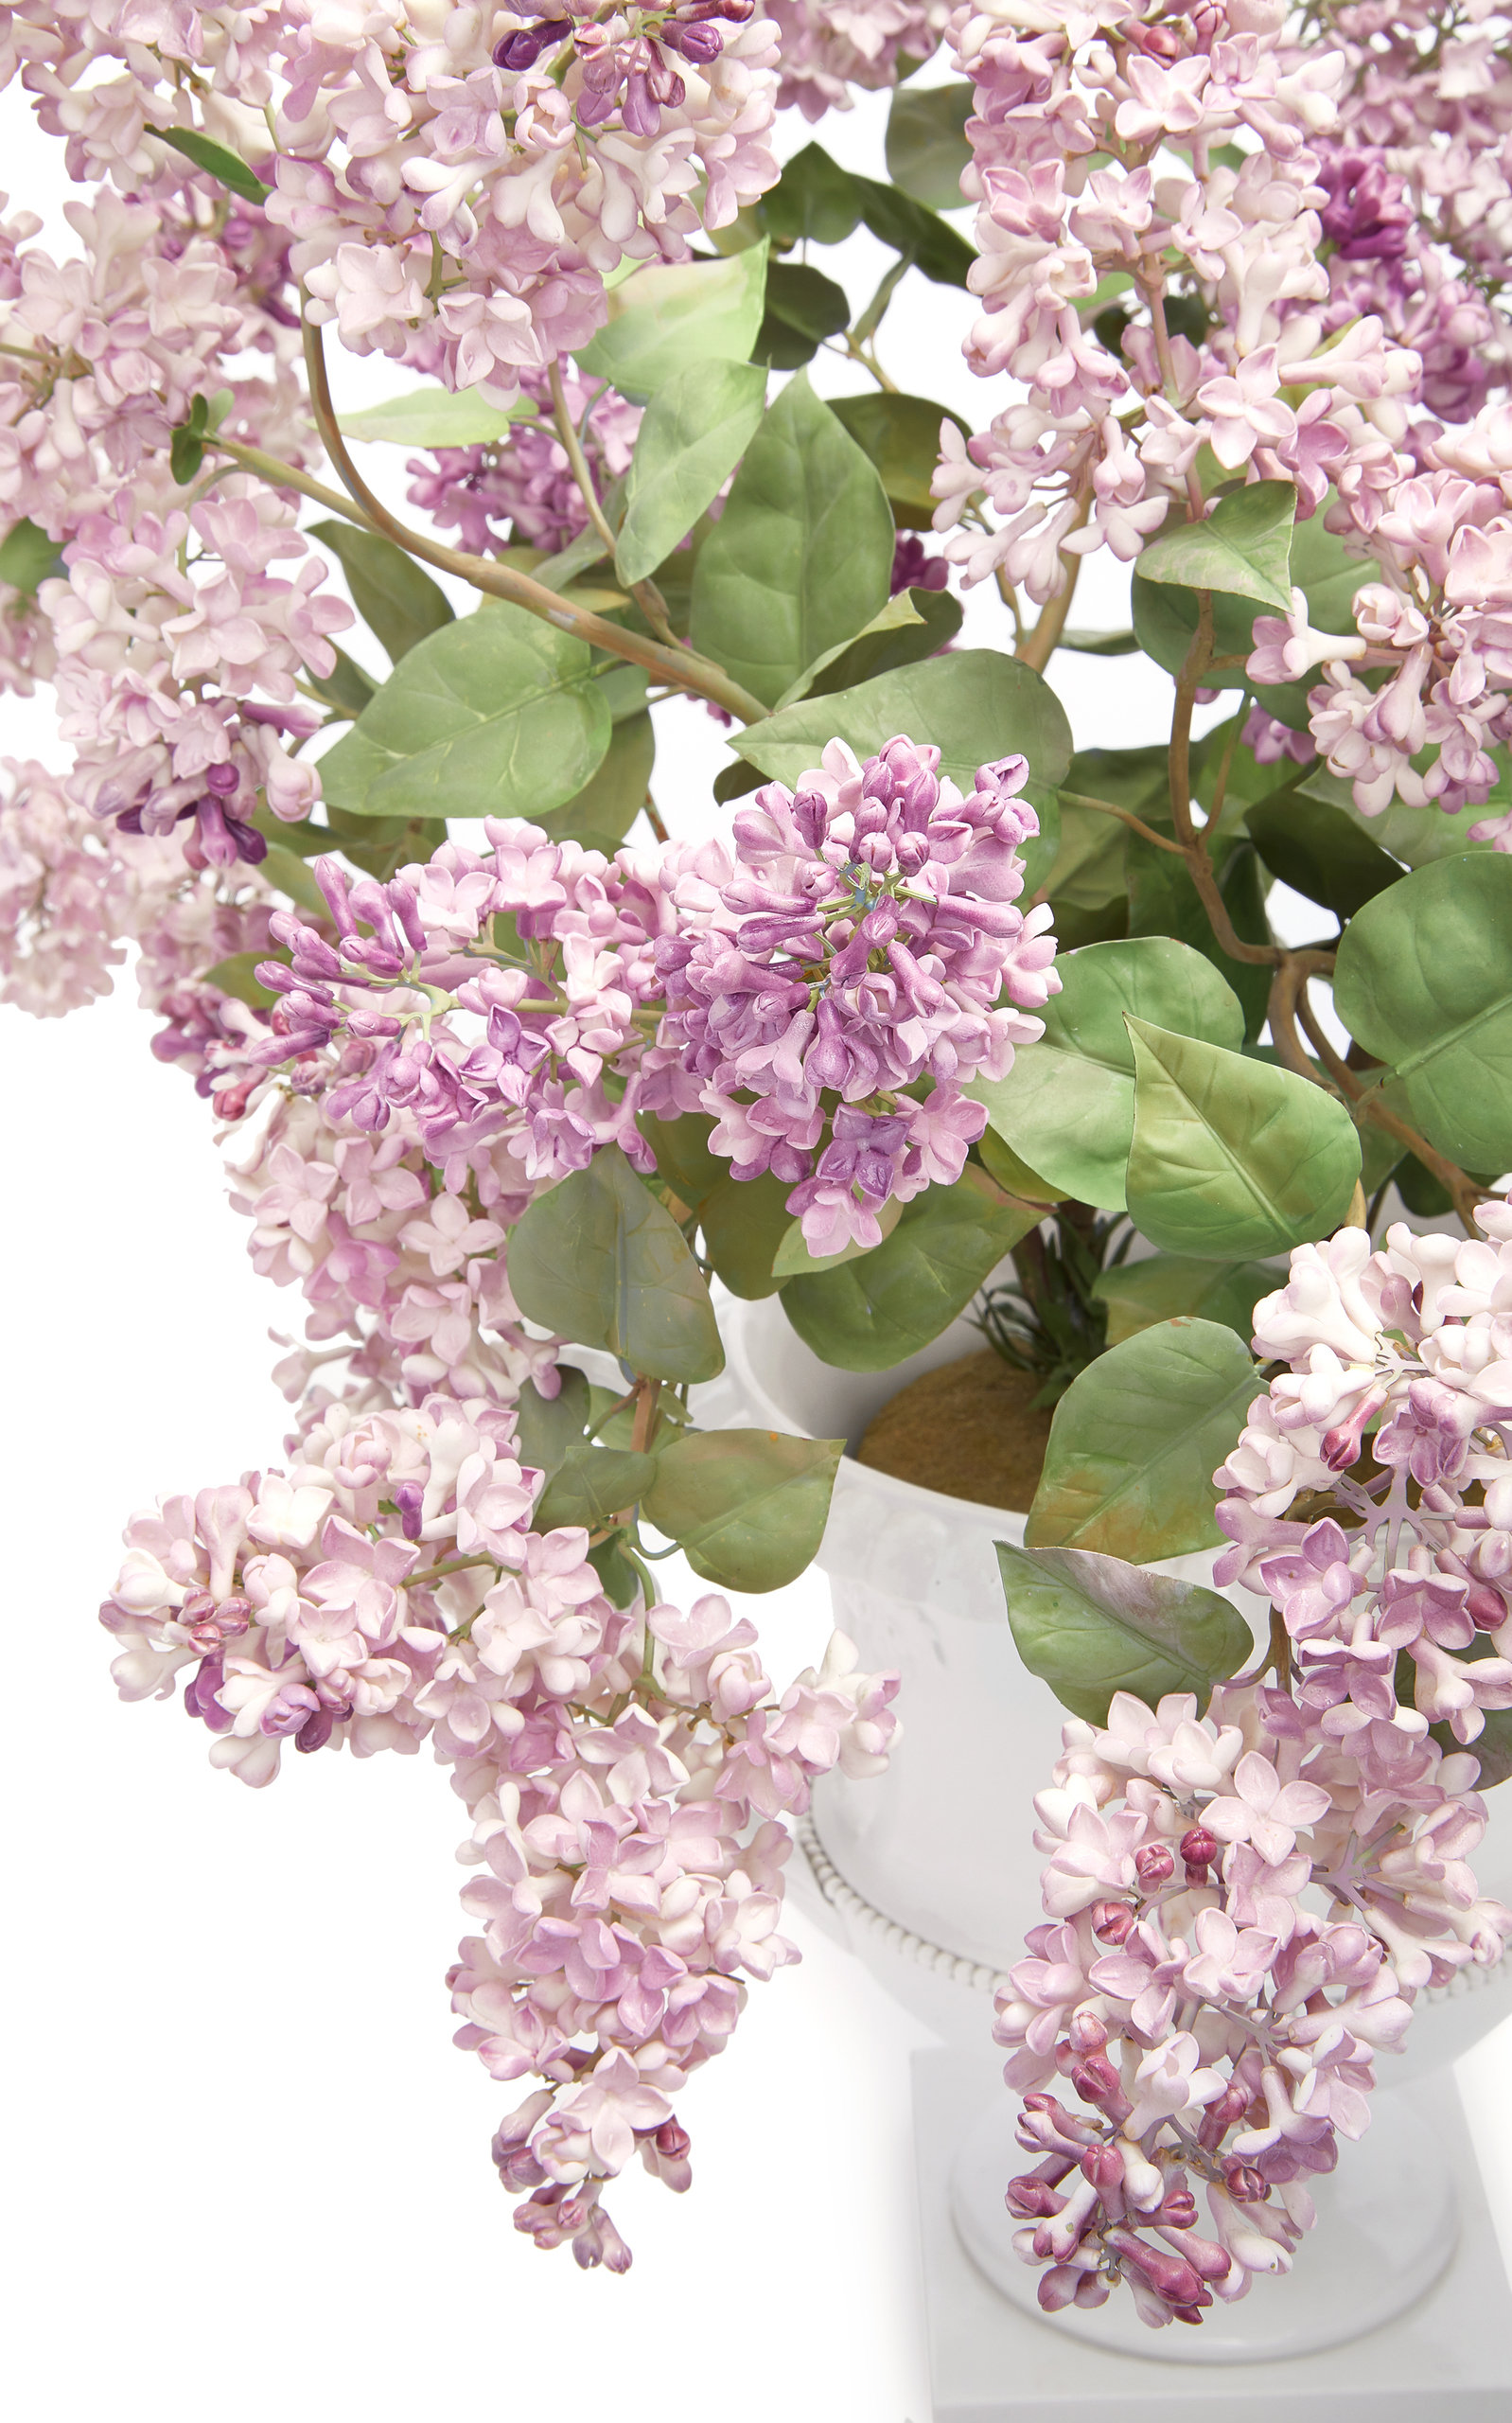 Lilacs created by Vladimir Kanevsky